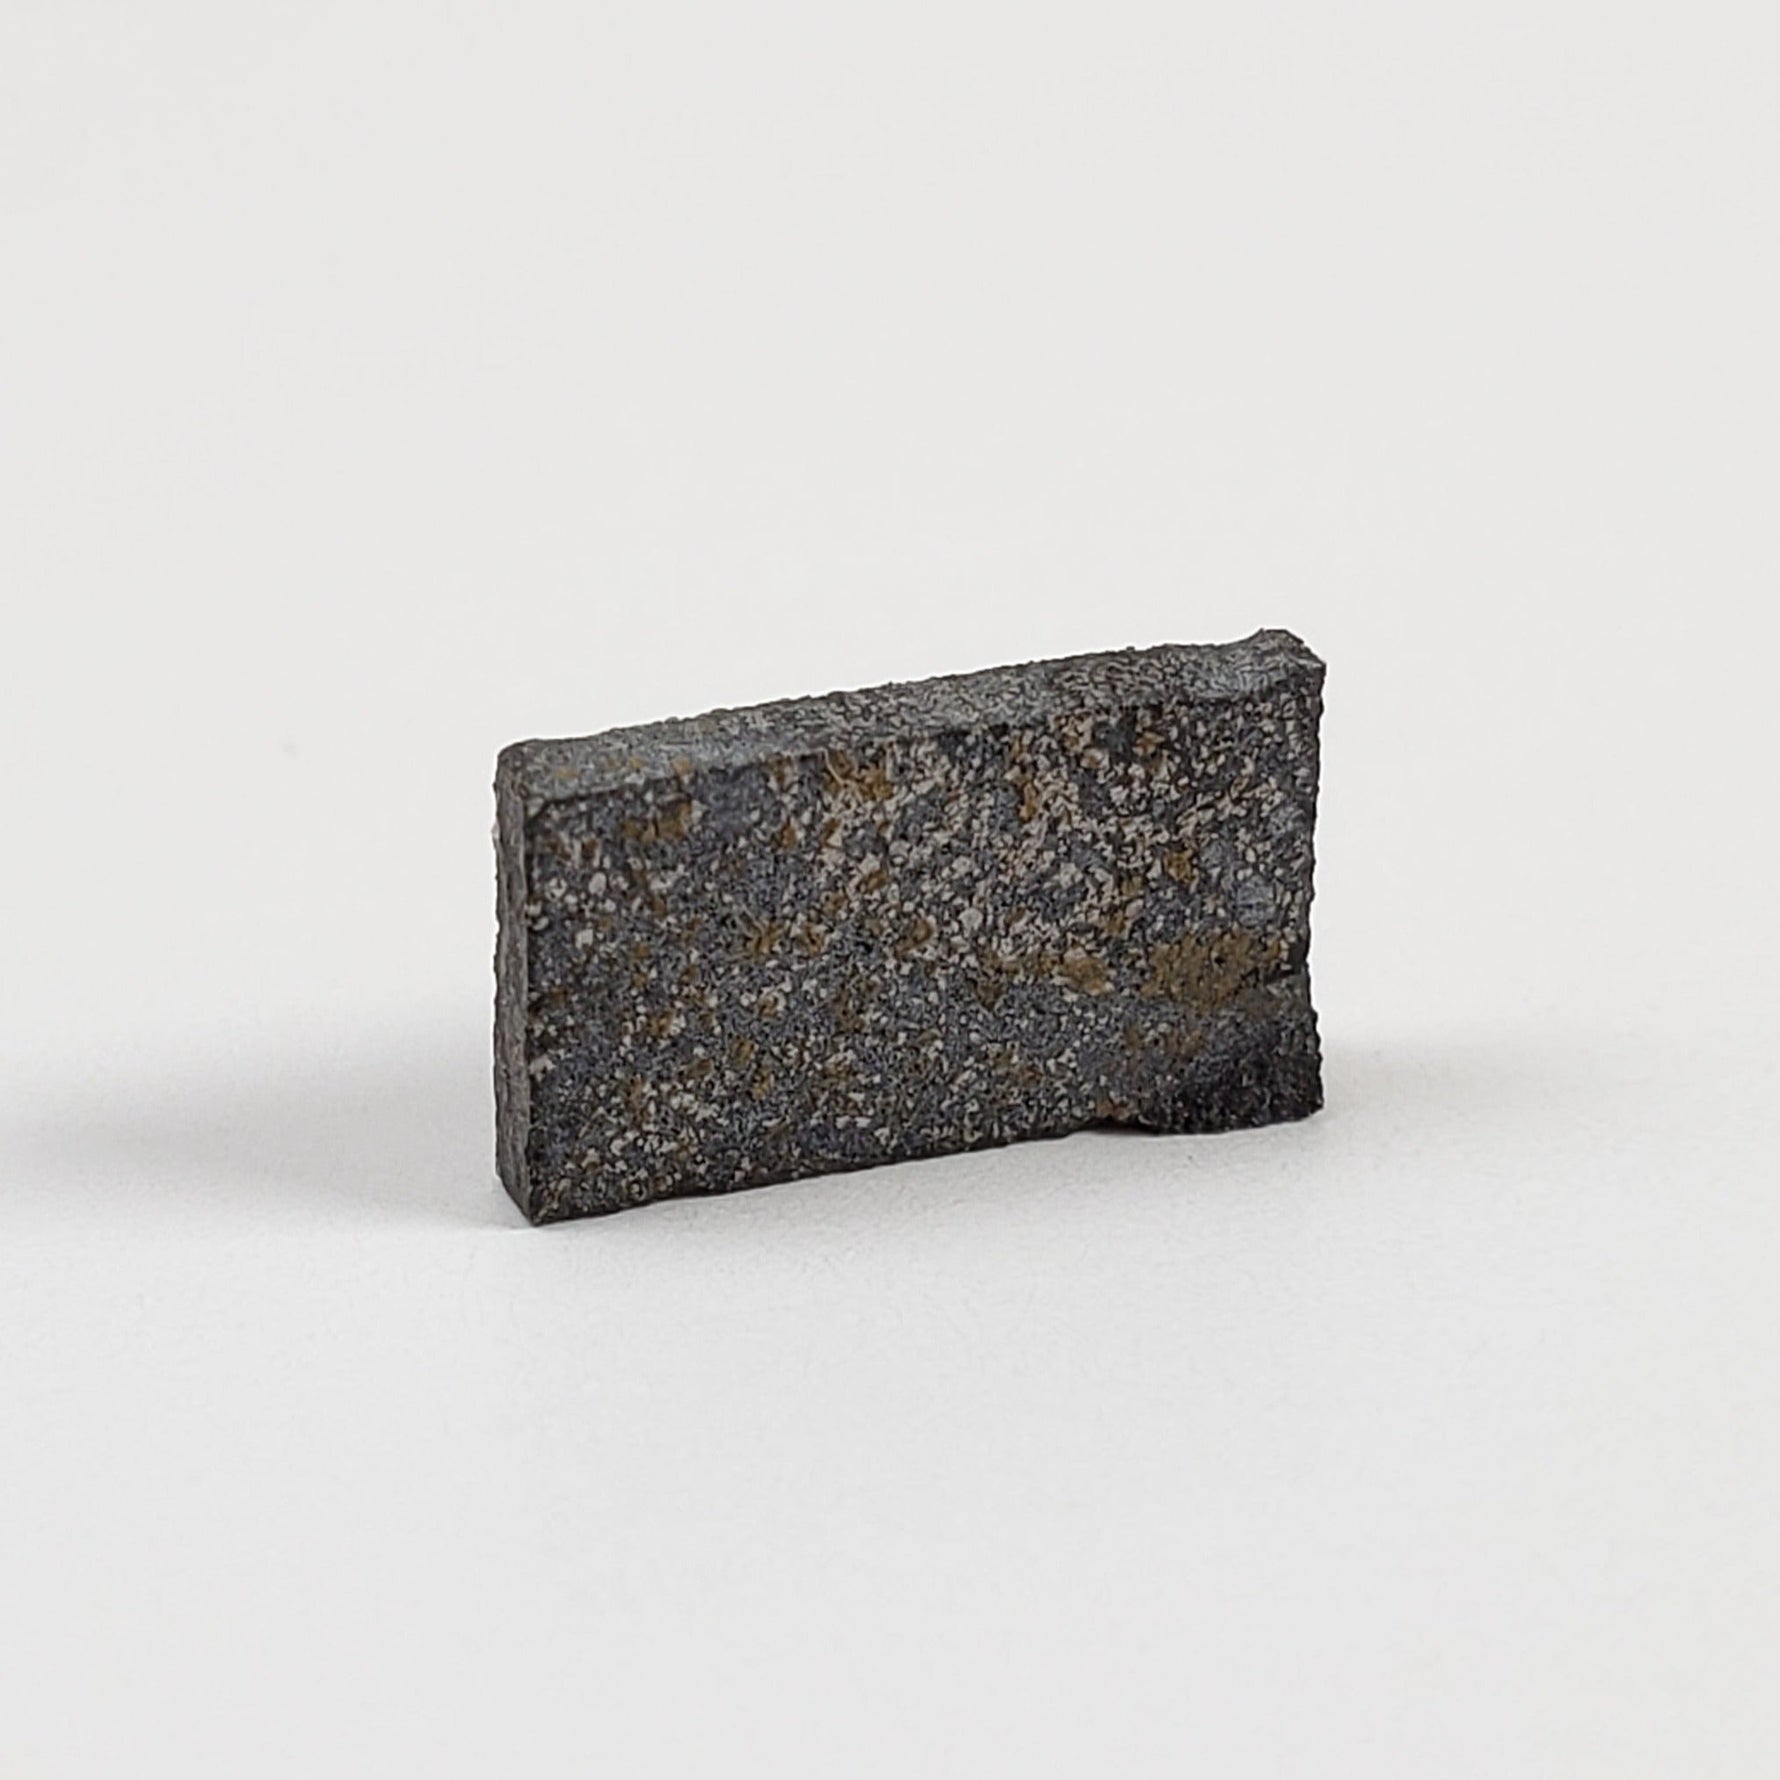 Abee Meteorite | 0.31gr | Part Slice | Rare Enstatite | EH4 Class | Observed Fall 1952 Canada | Canagem.com